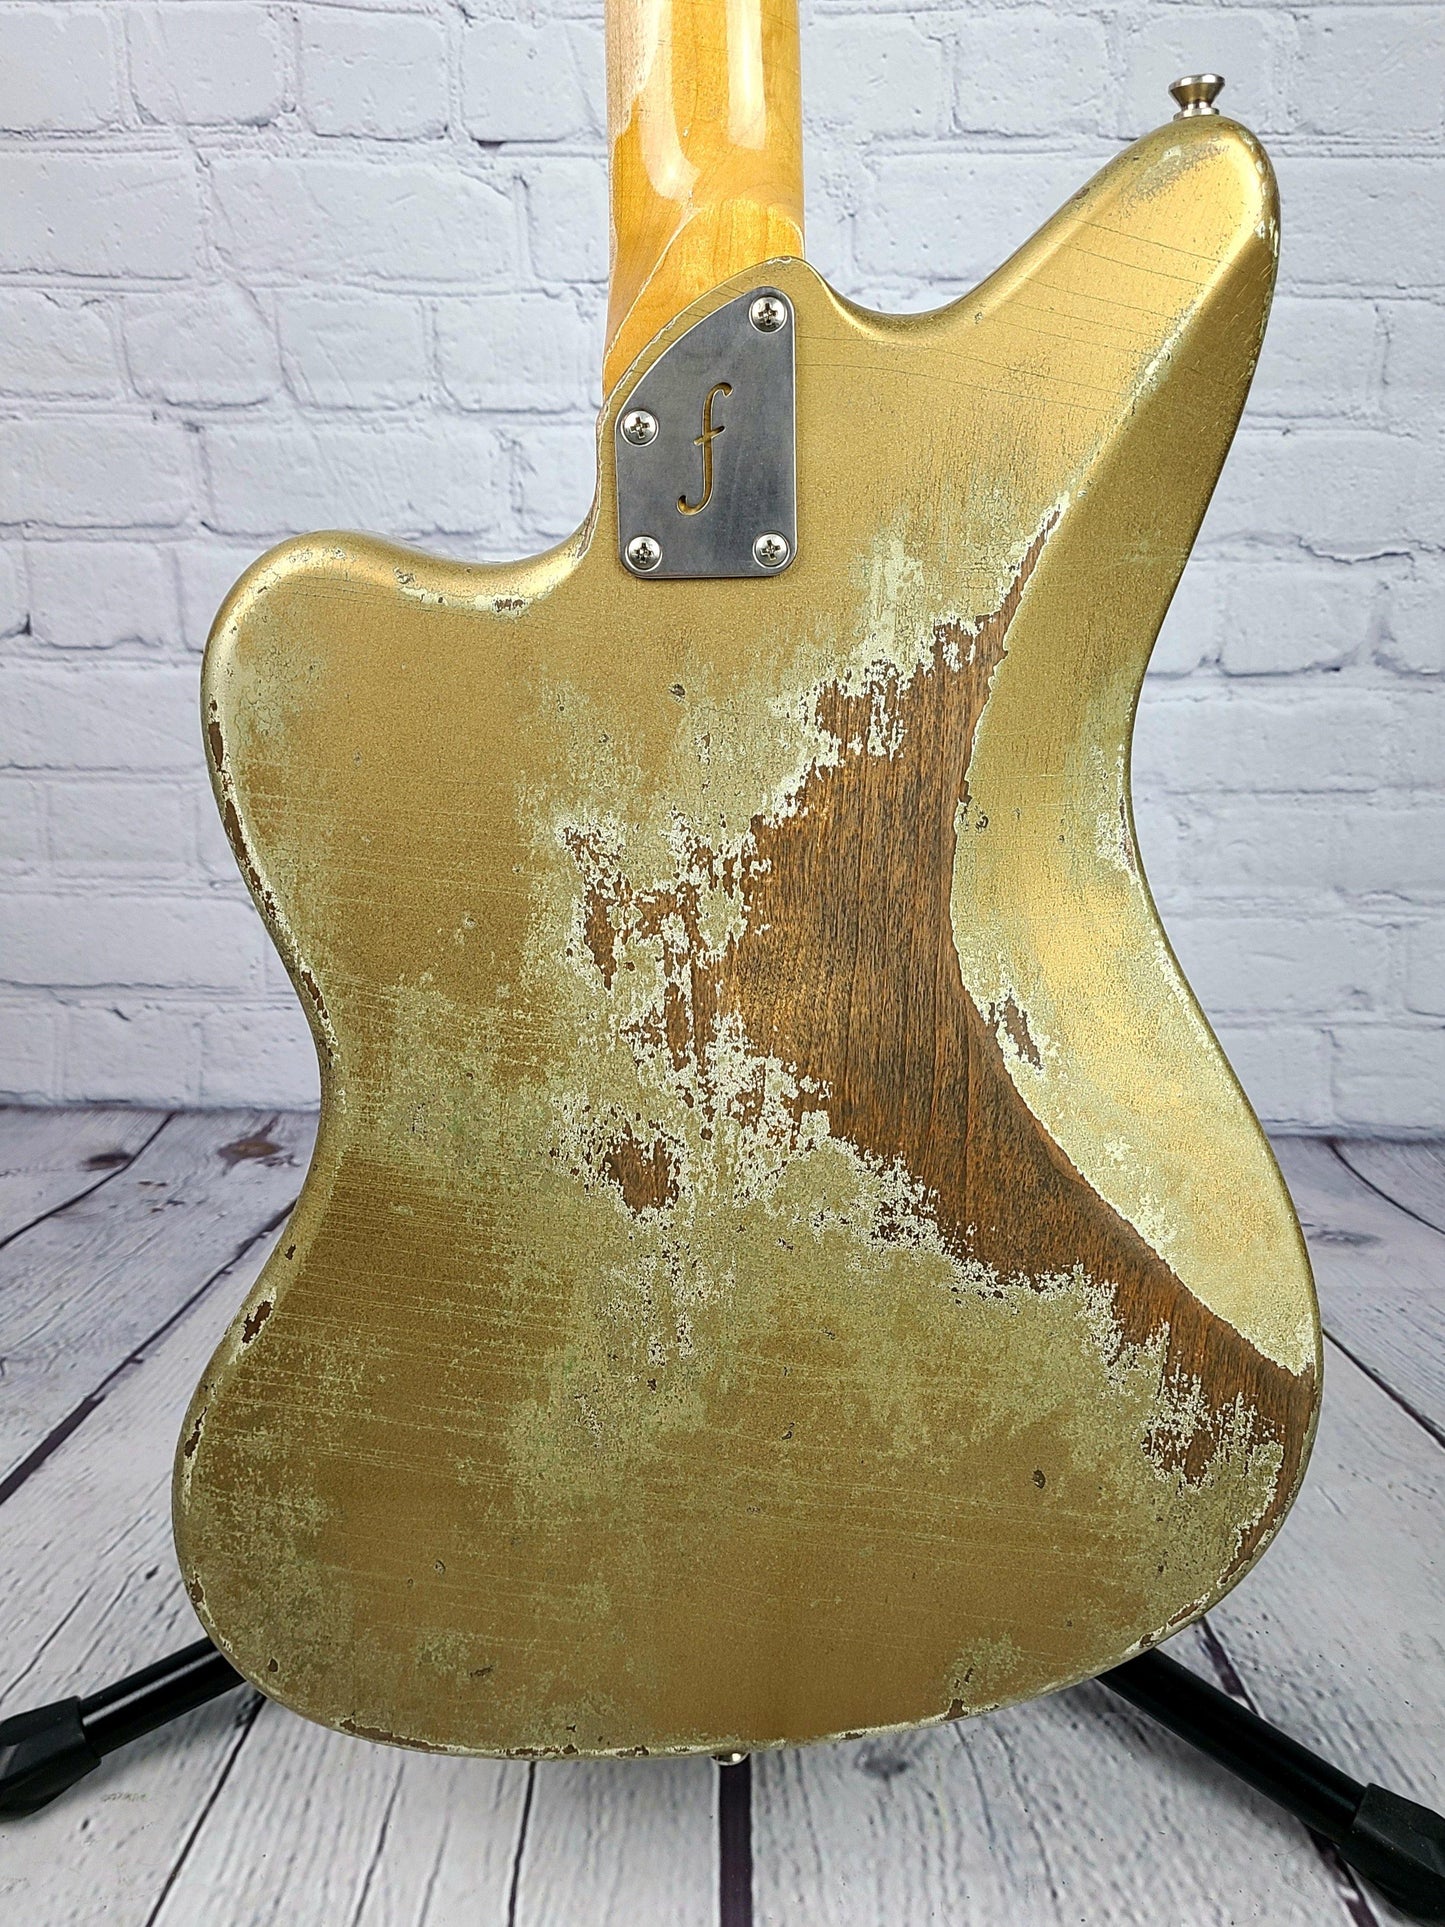 Fano JM6 Oltre Gold Top Rosewood Board USA Electric Guitar - Guitar Brando